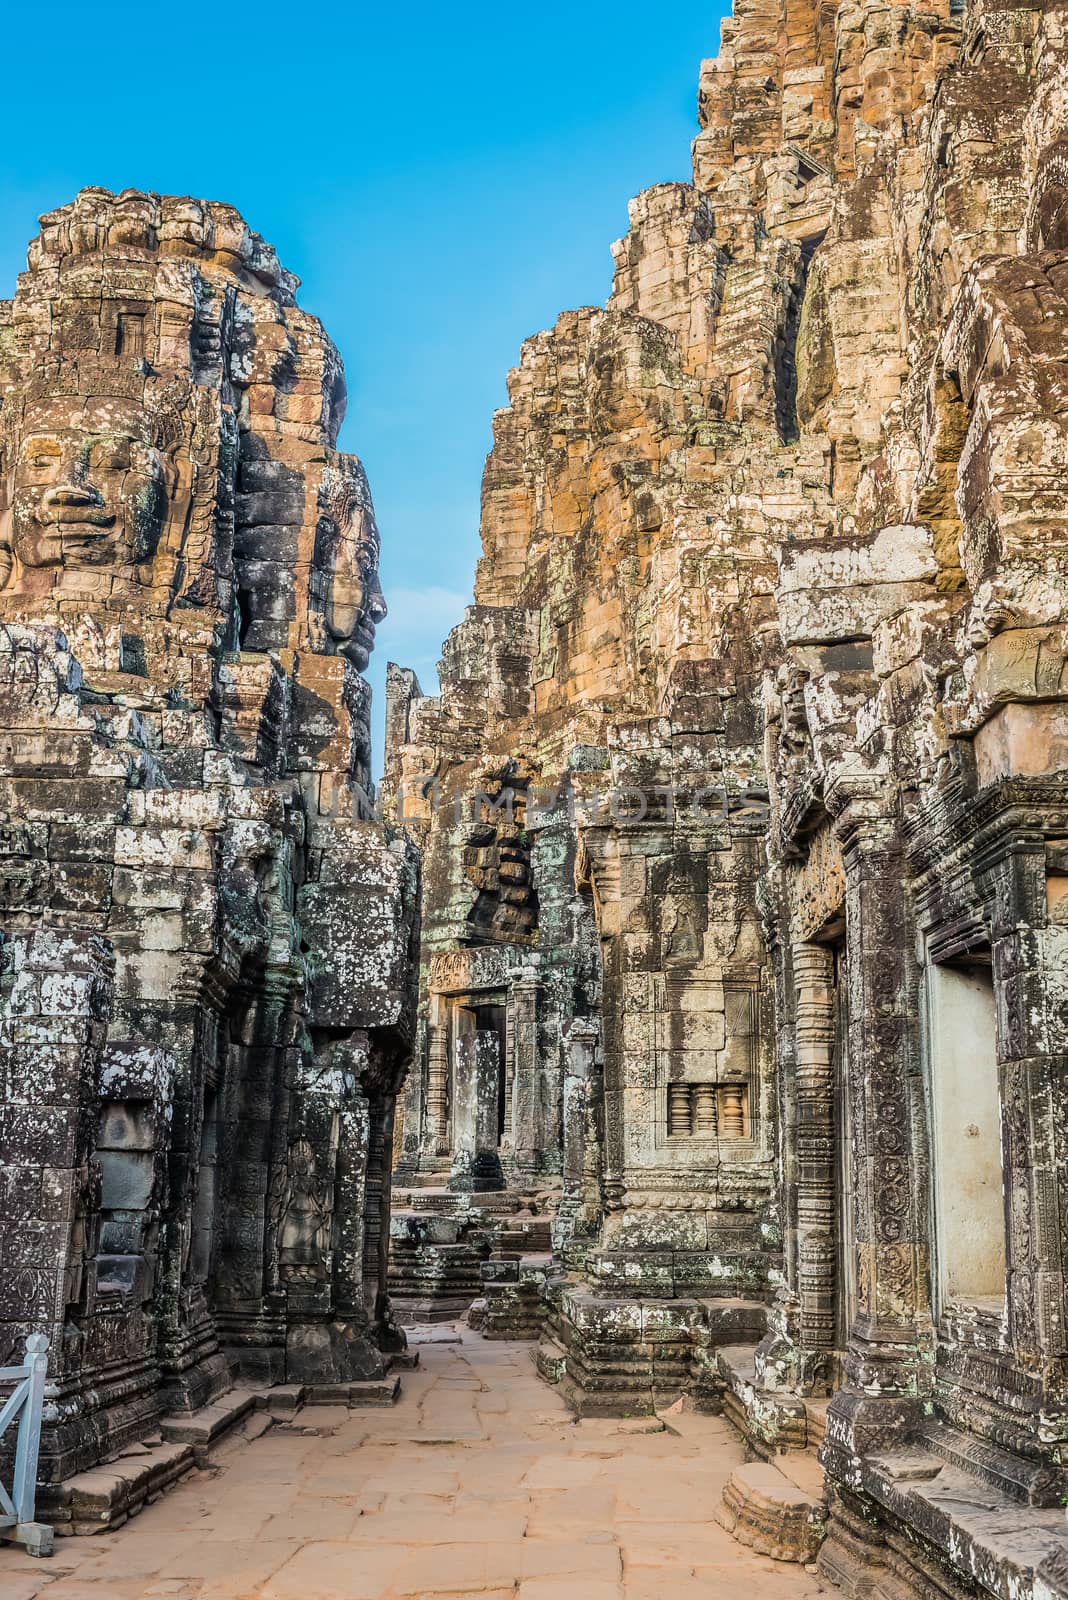 prasat bayon temple Angkor Thom Cambodia by PIXSTILL